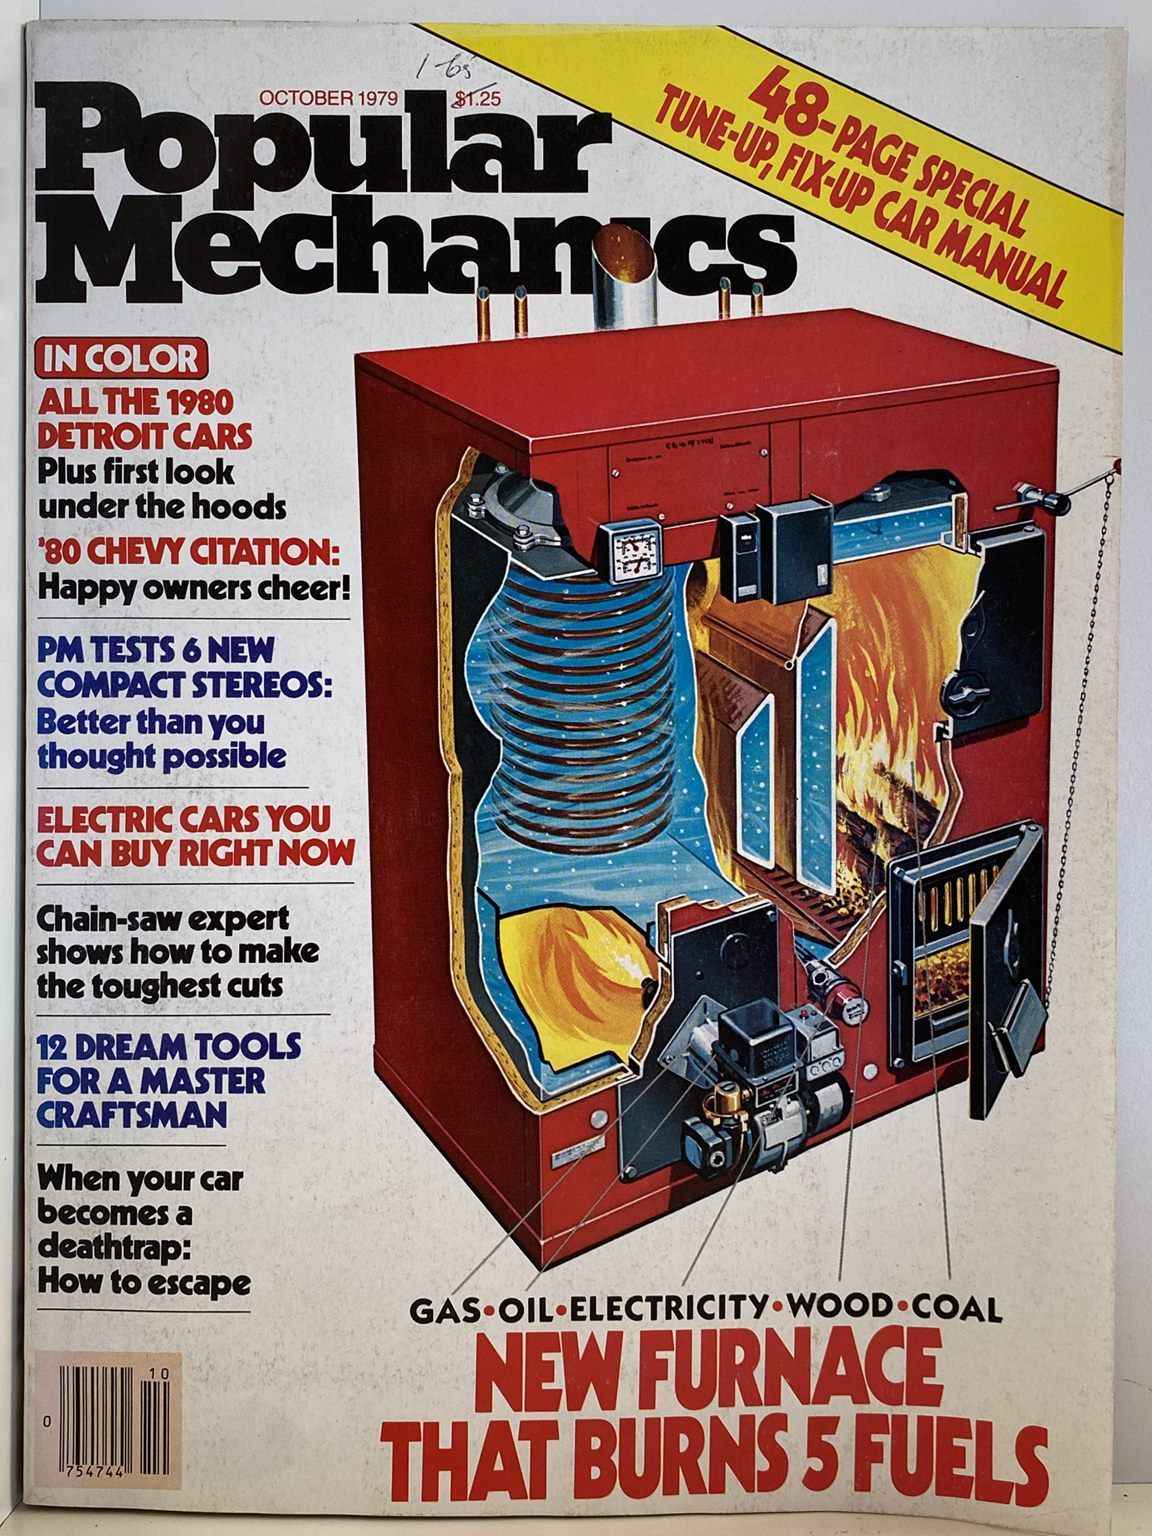 VINTAGE MAGAZINE: Popular Mechanics - Vol. 152, No. 4 - October 1979